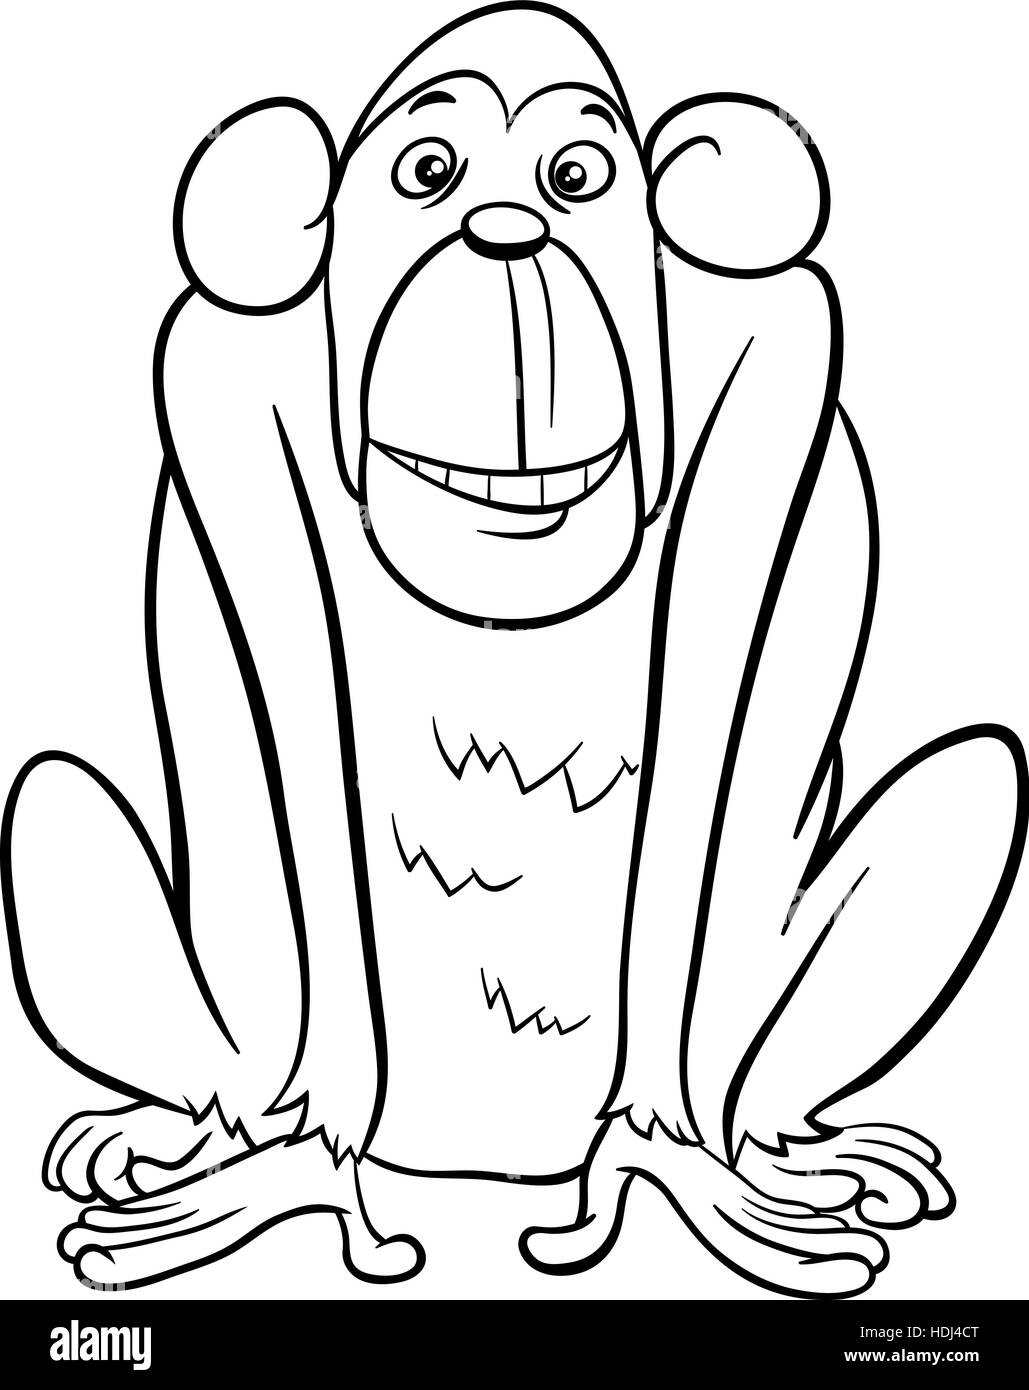 Black and White Cartoon Illustration of Ape or Monkey Animal ...